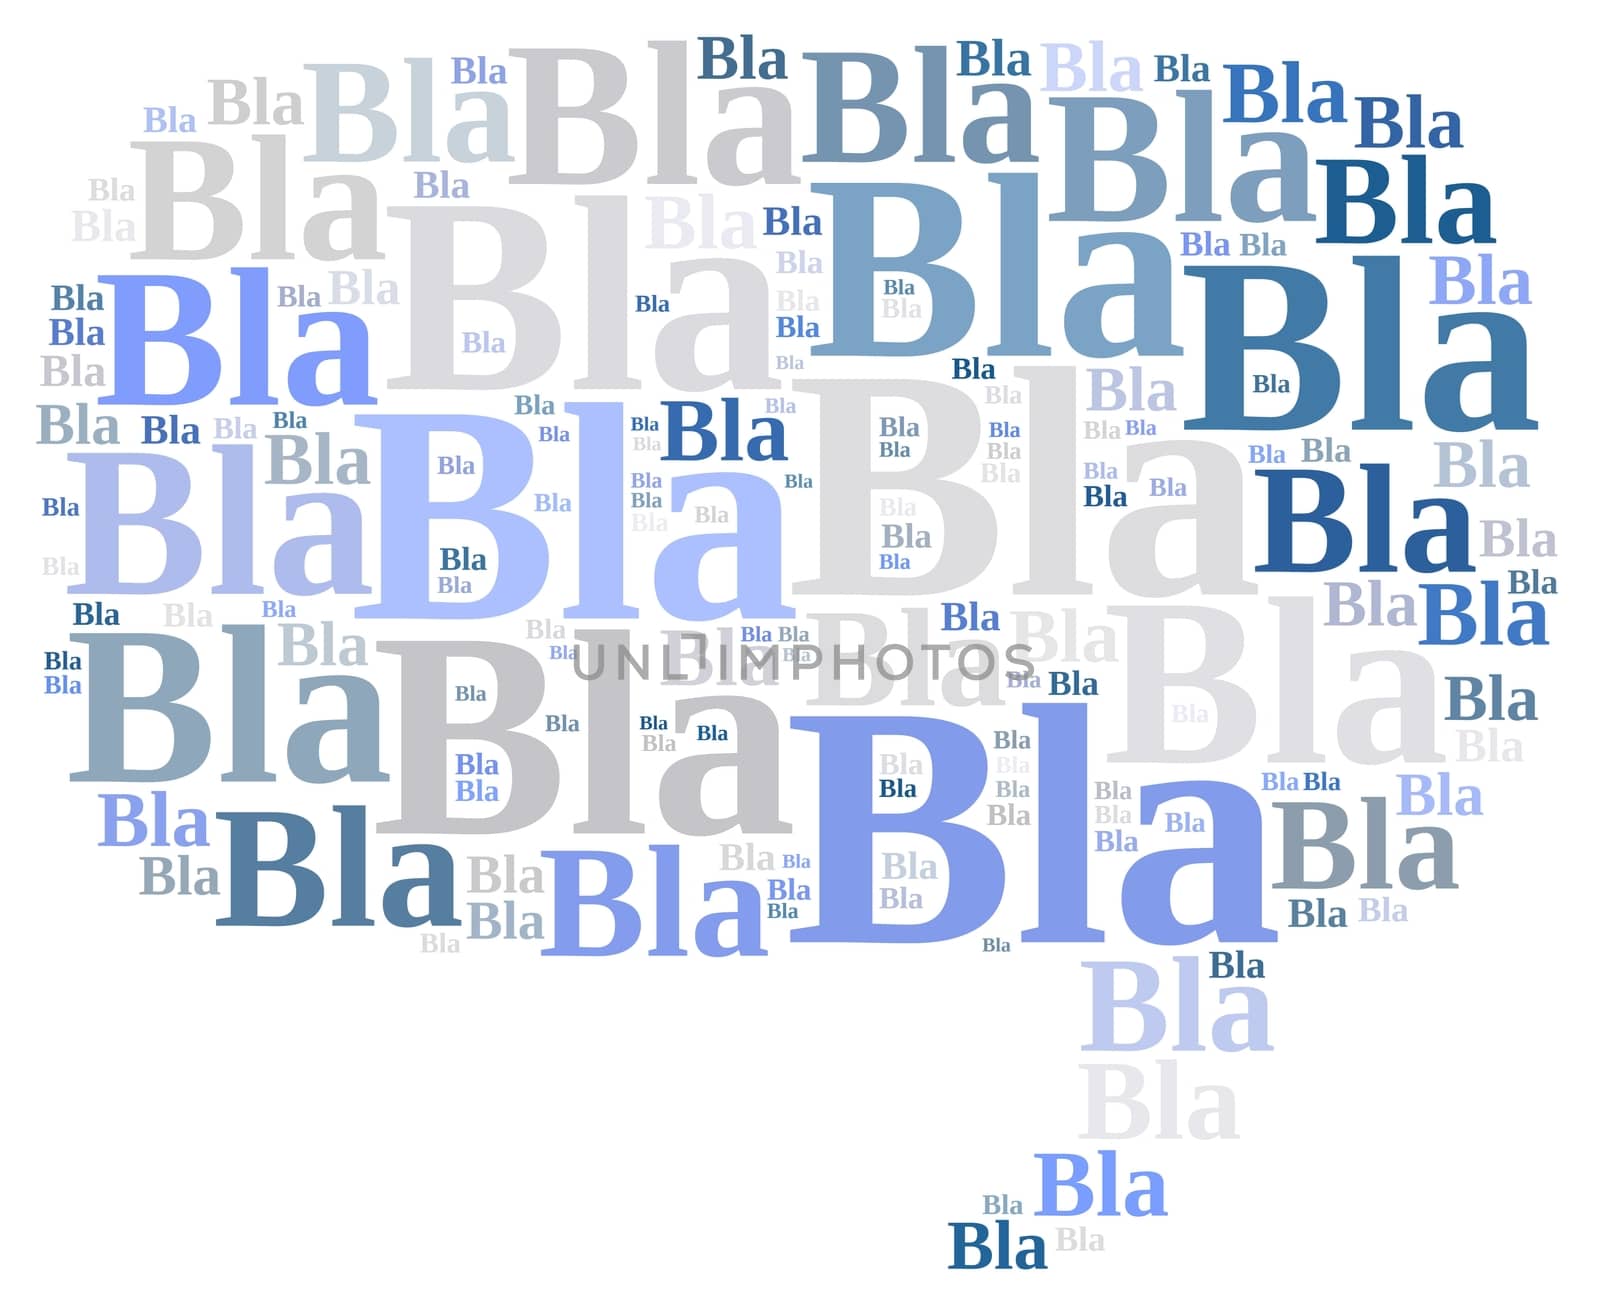 Illustration with word cloud about Bla bla bla.